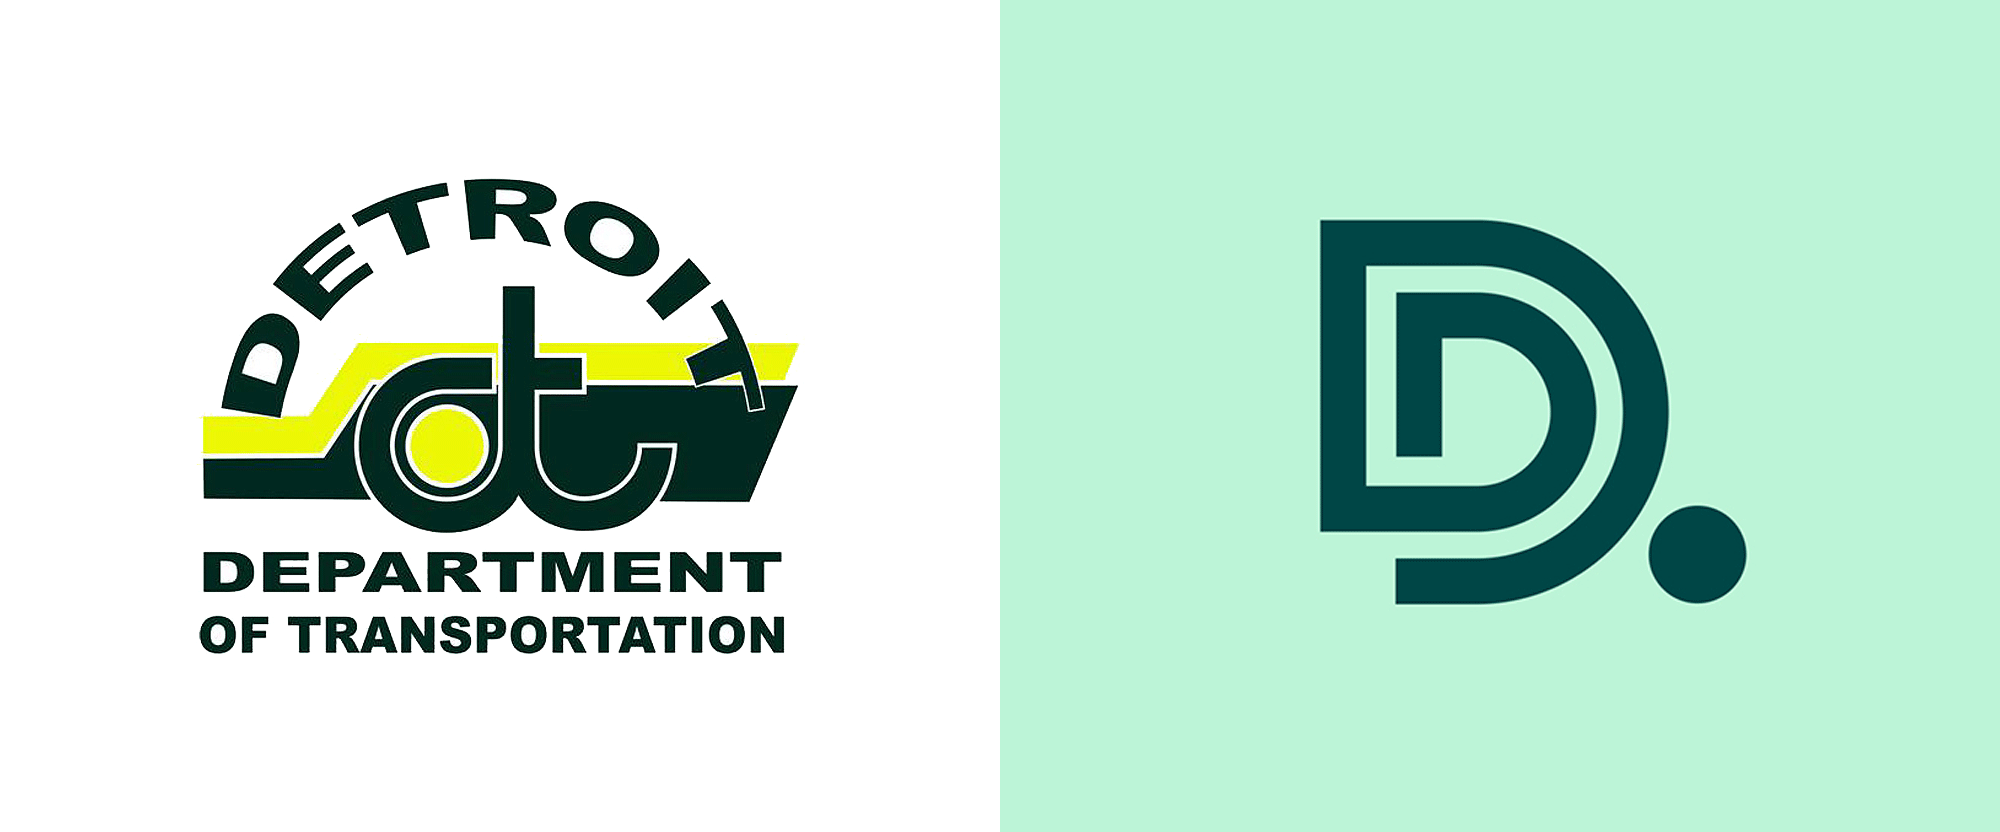 Detroit Logo - Brand New: New Logo and Identity for Detroit Department